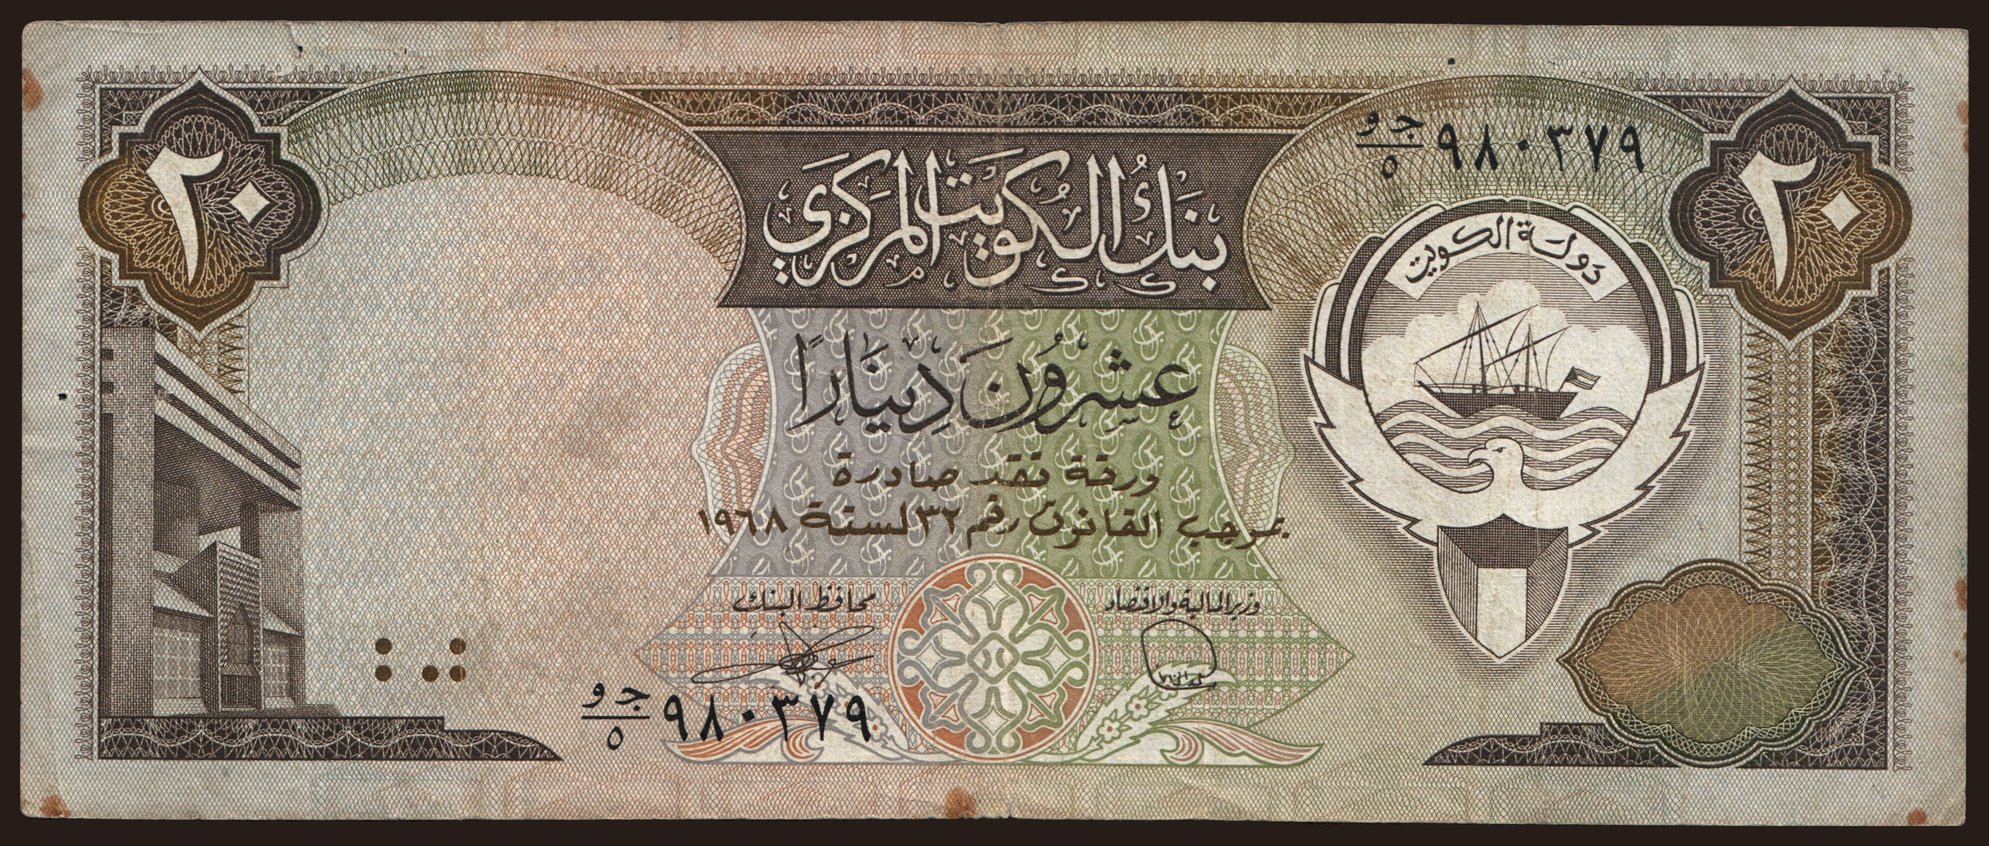 20 dinars, 1980